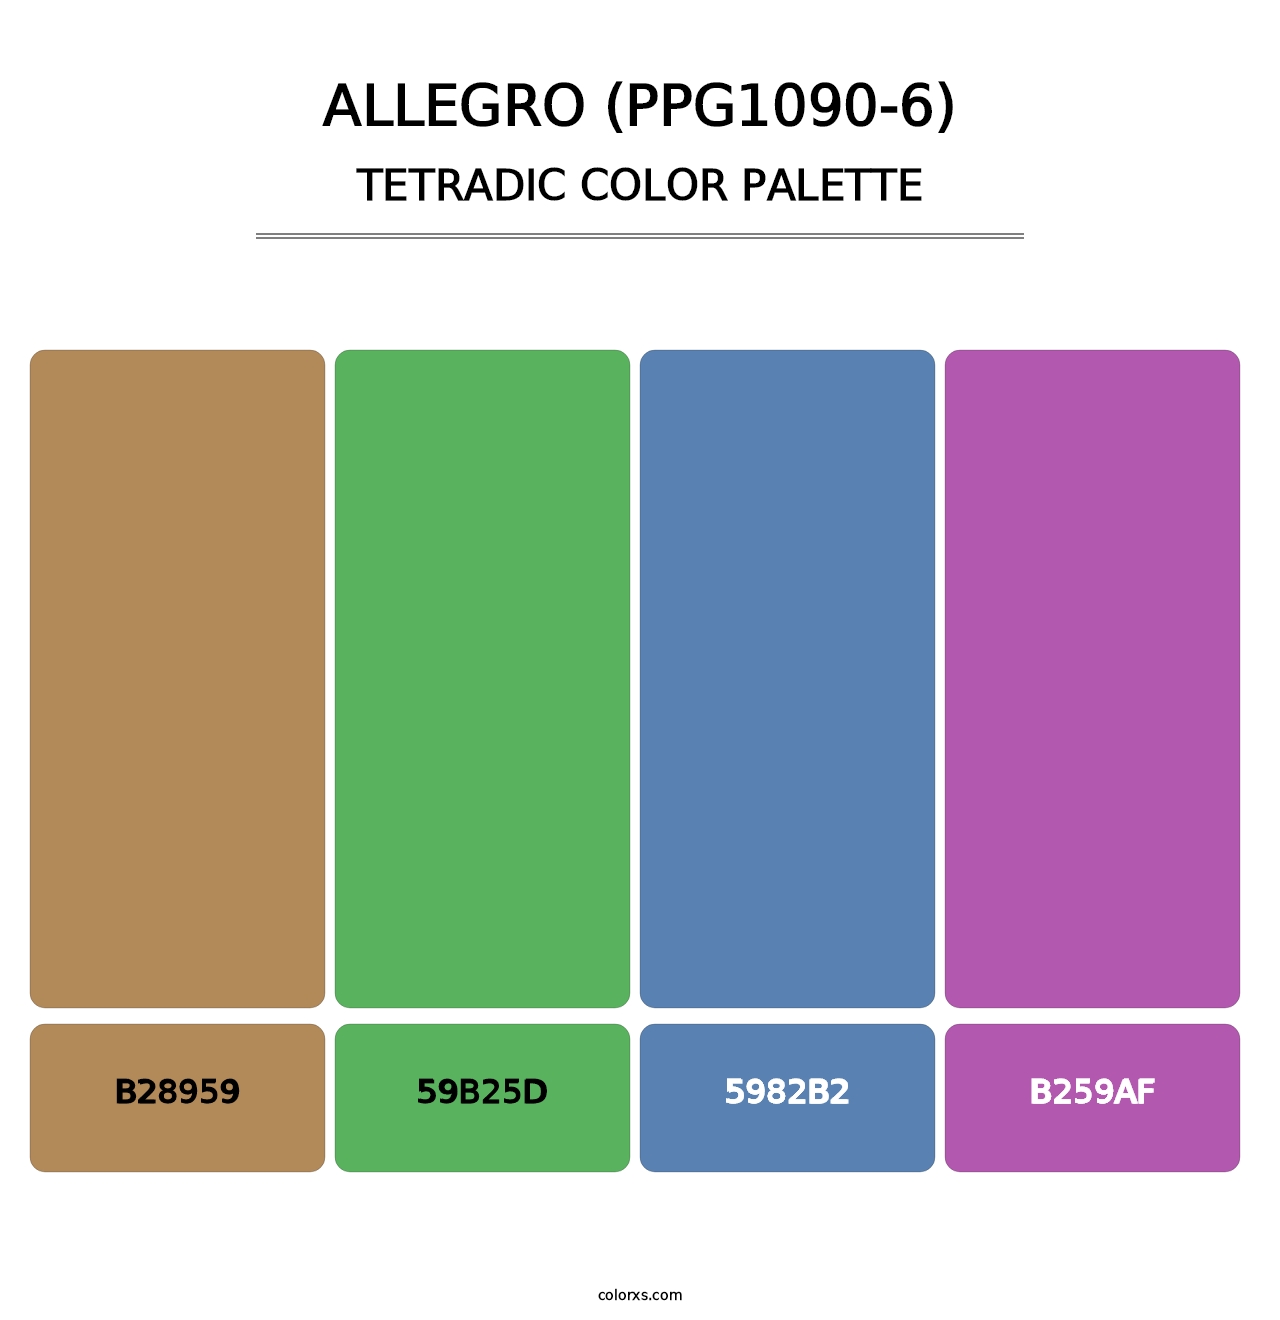 Allegro (PPG1090-6) - Tetradic Color Palette